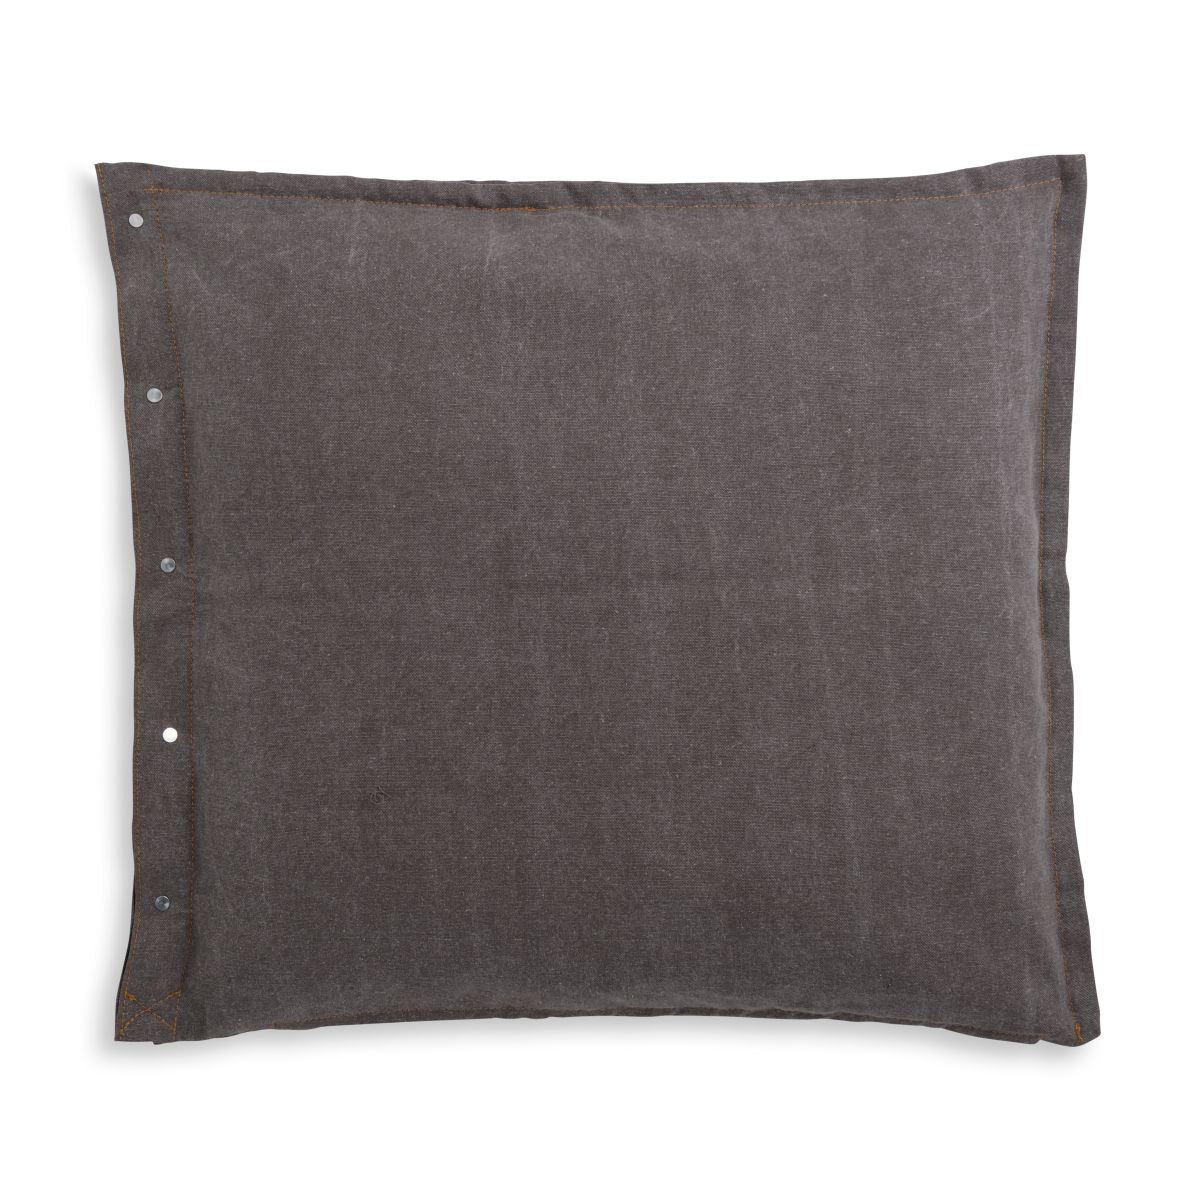 rick cushion browntaupe 50x50